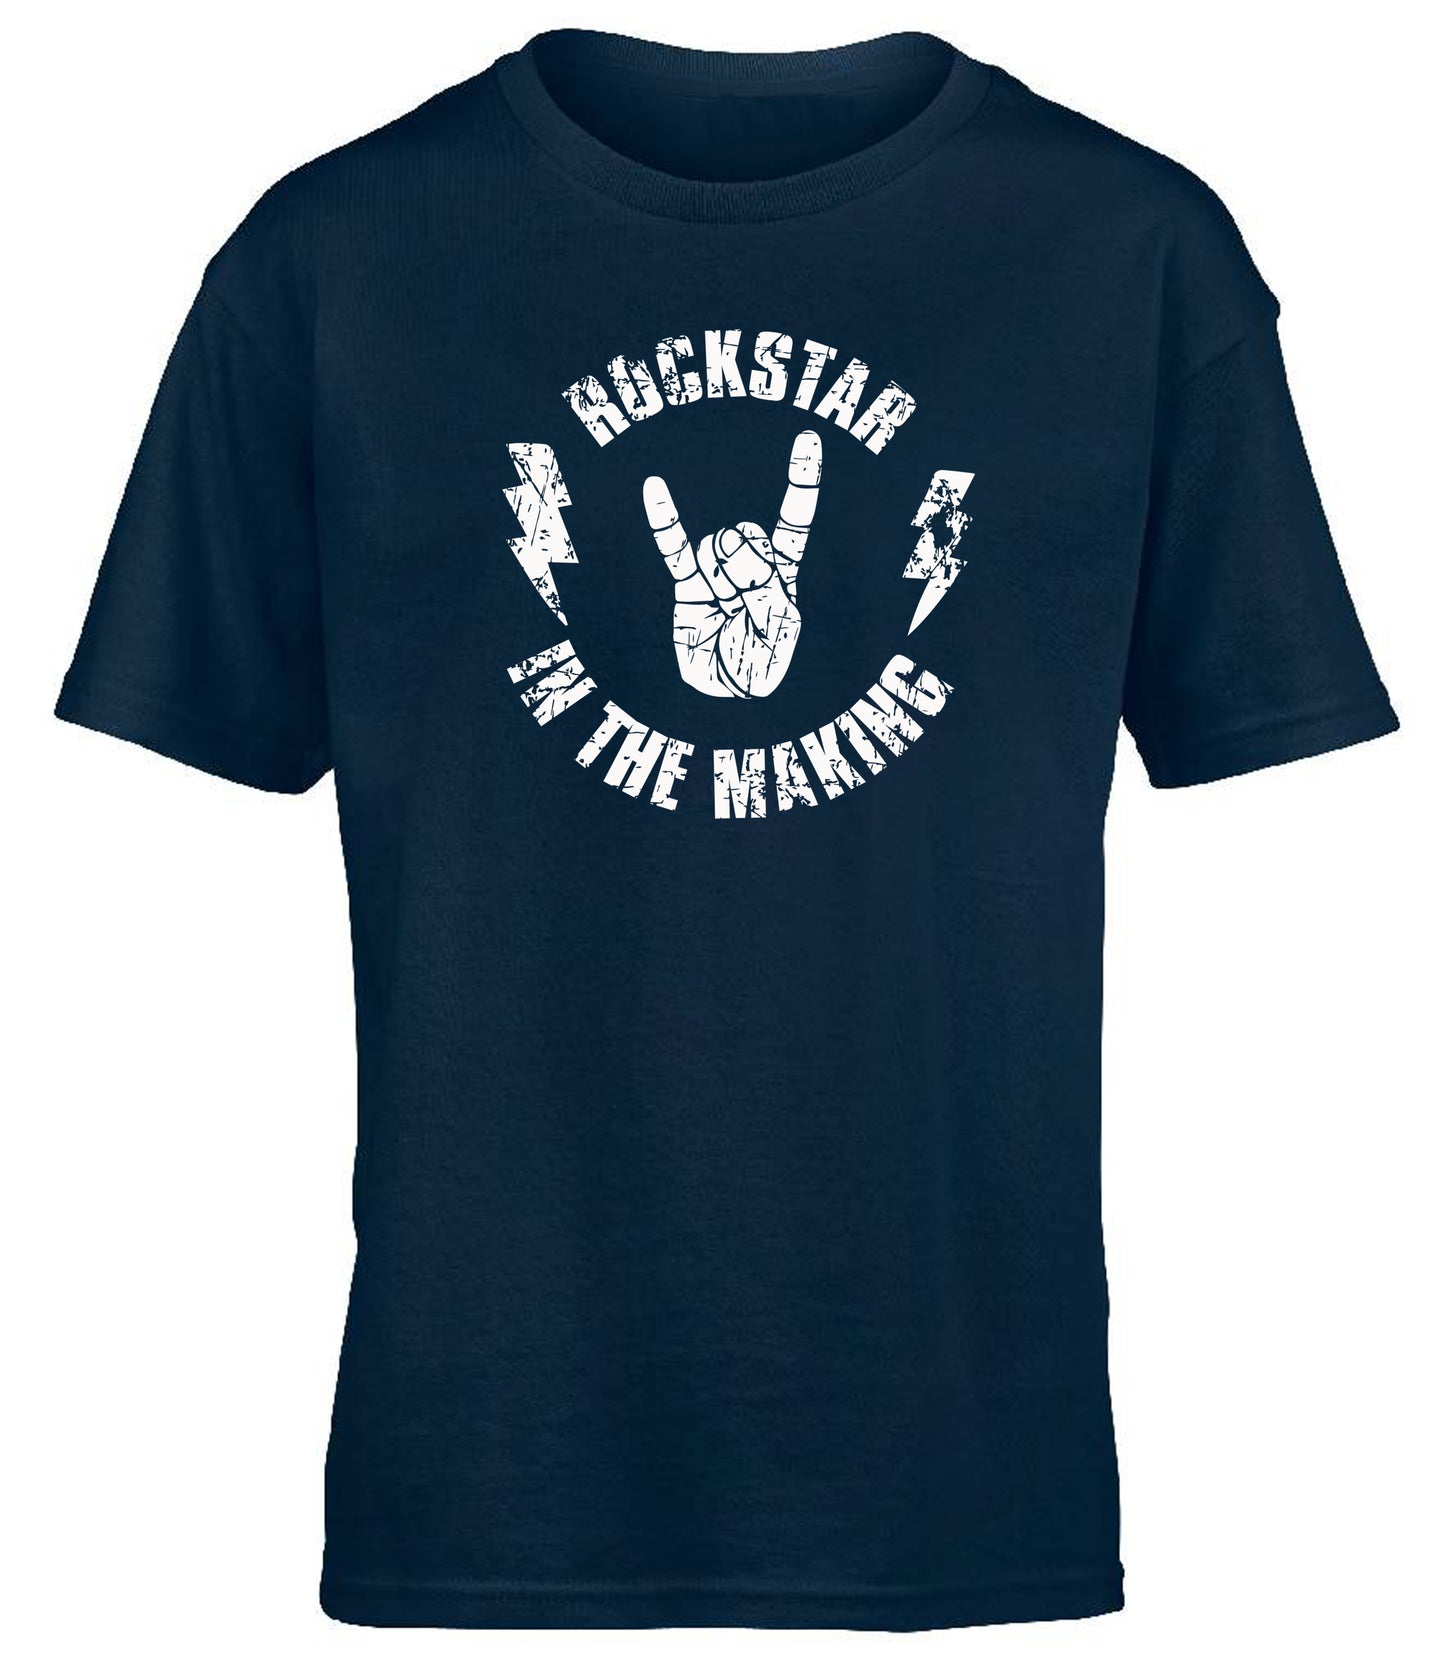 Rockstar in The Making children's T-shirt